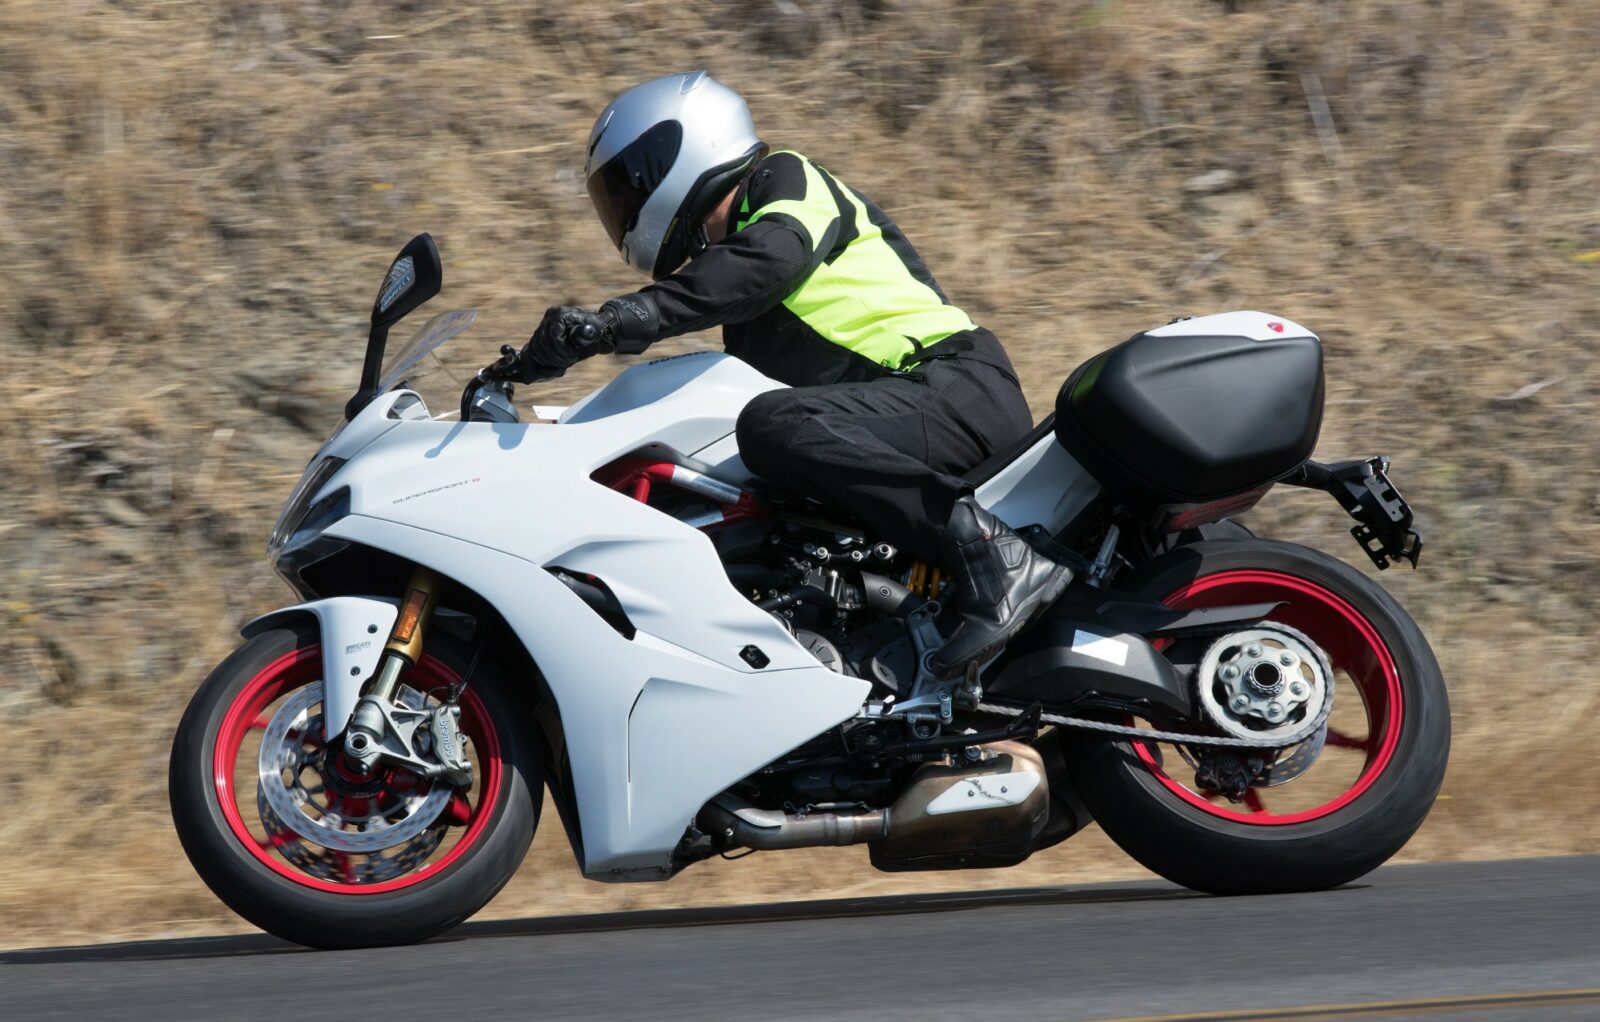 Best REAX Motorcycle Riding Gear